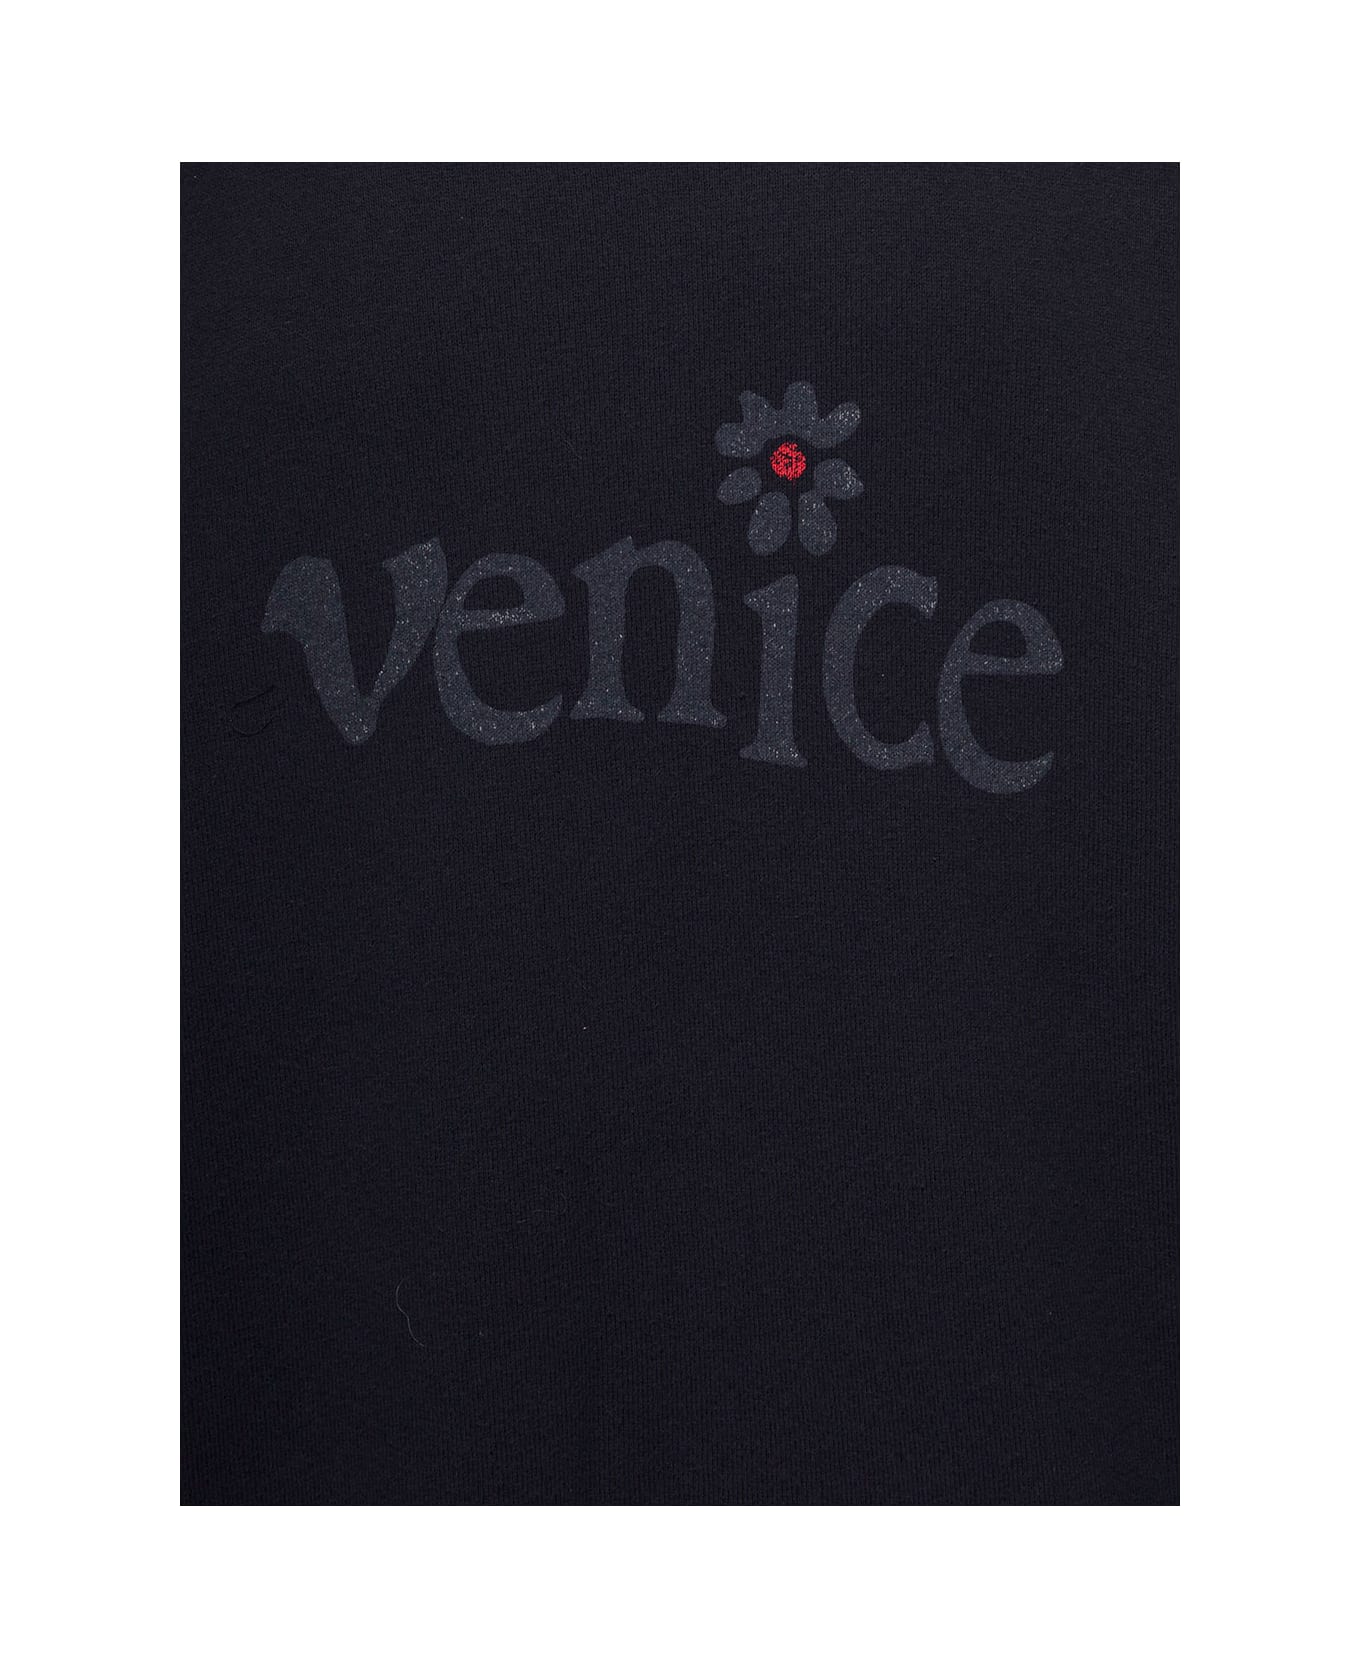 ERL Blsck Crewneck Sweatshirt With Venice Print In Cotton - Black フリース